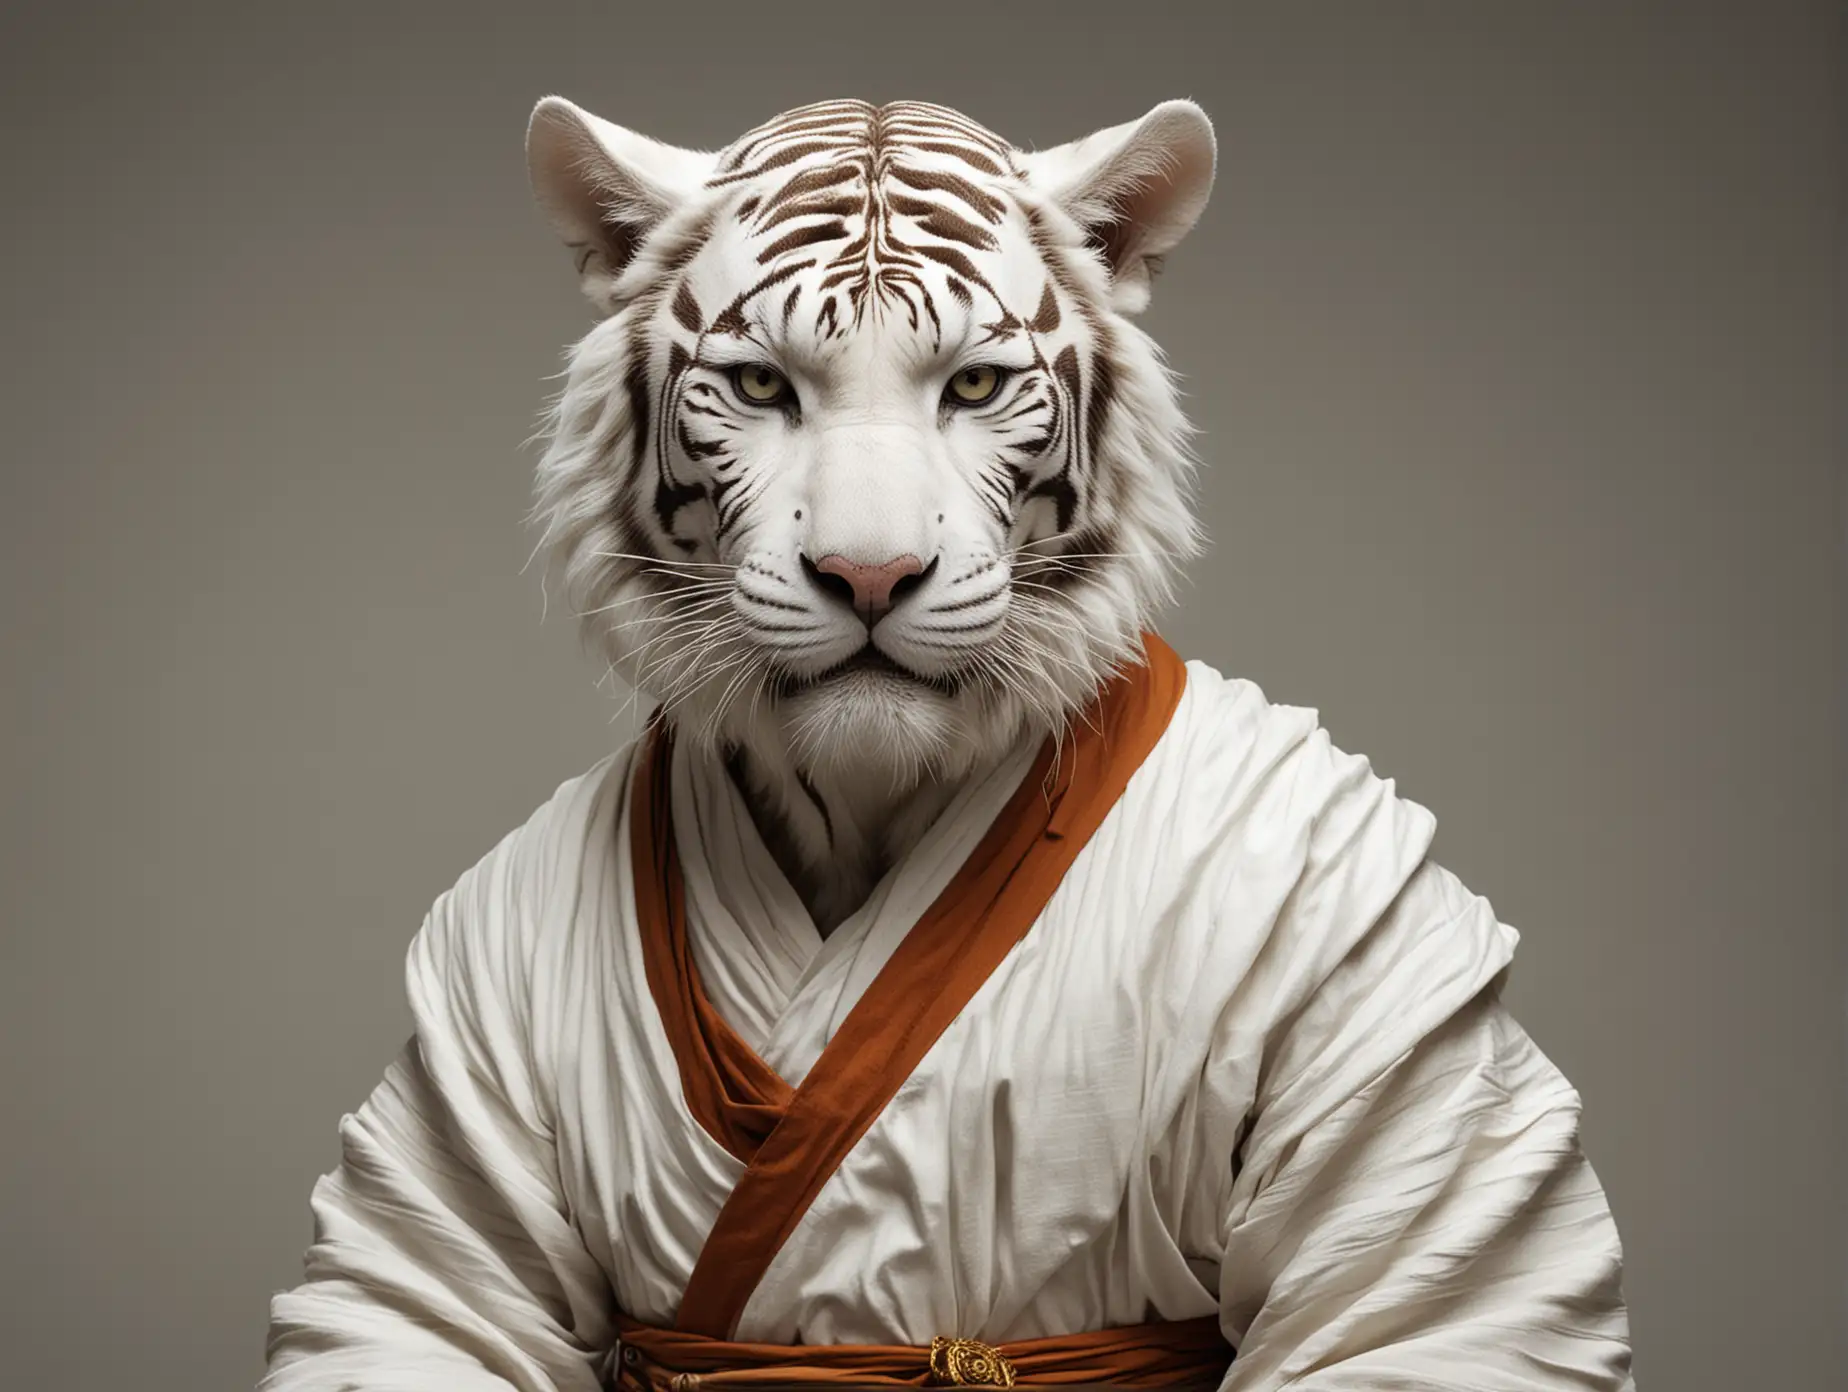 Anthropomorphic-White-Tiger-Monk-in-Tranquil-Meditation